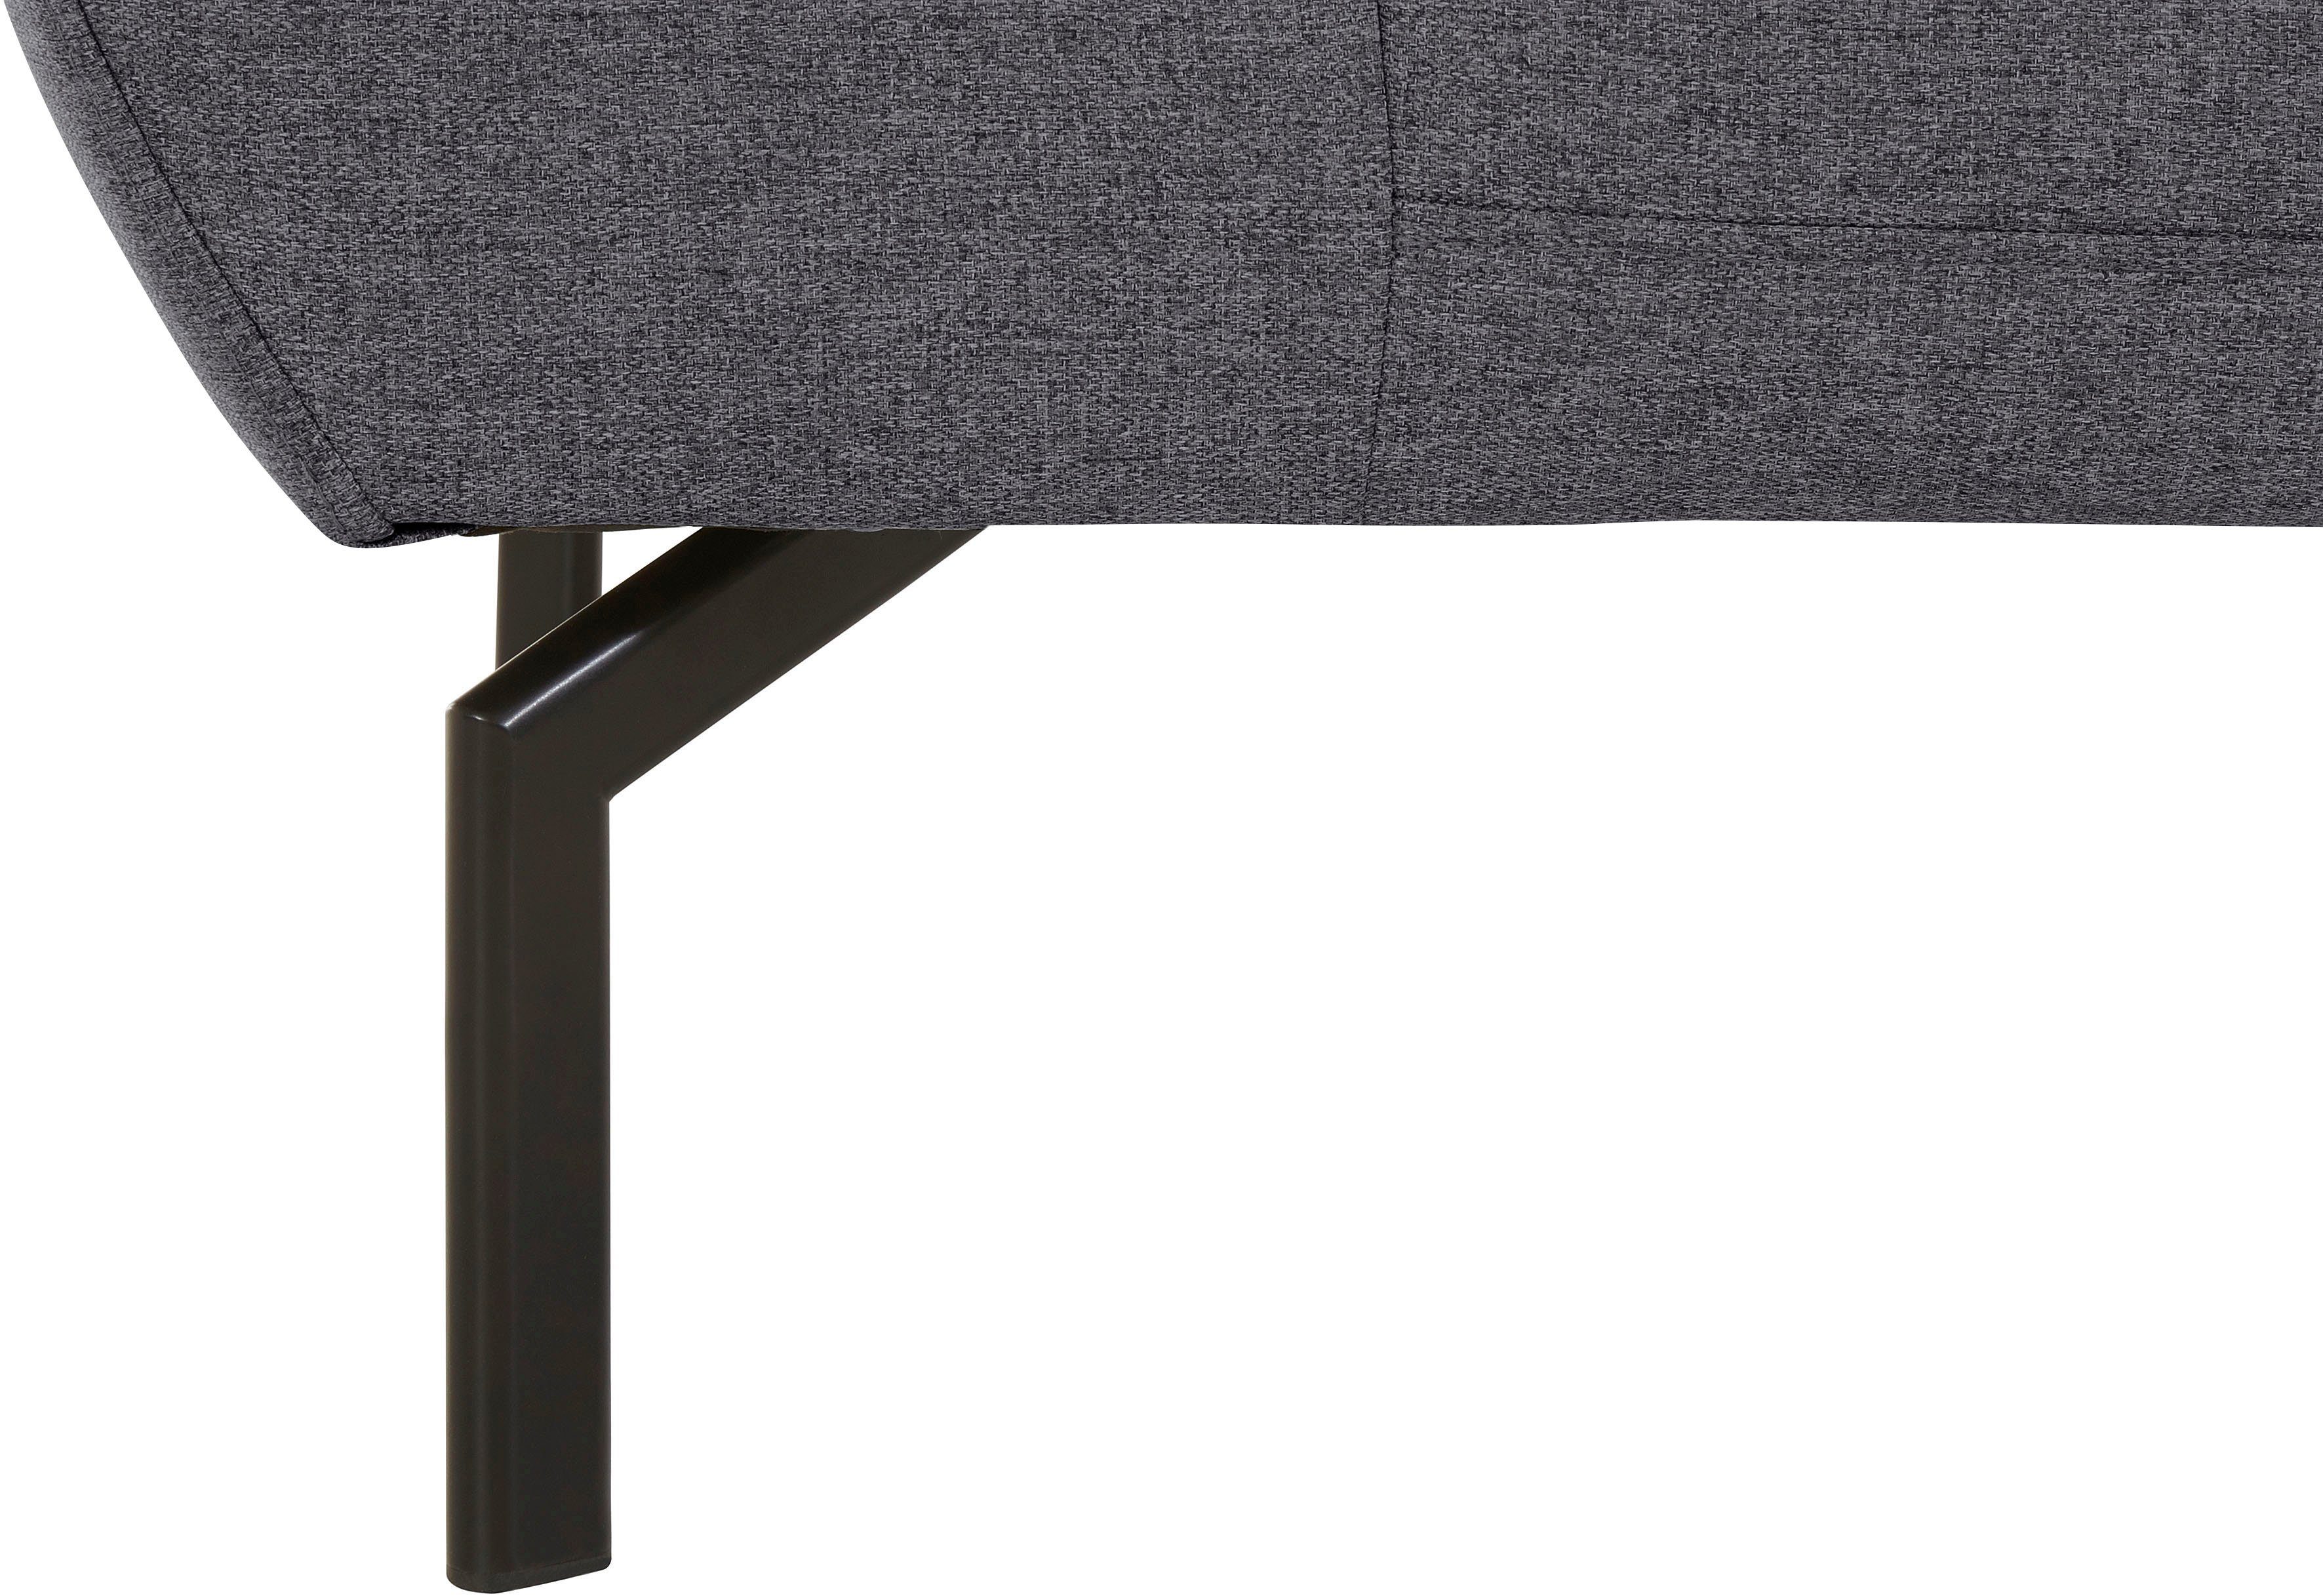 Style of Sessel mit wahlweise in Lederoptik Luxus-Microfaser Rückenverstellung, Places Luxus, Trapino